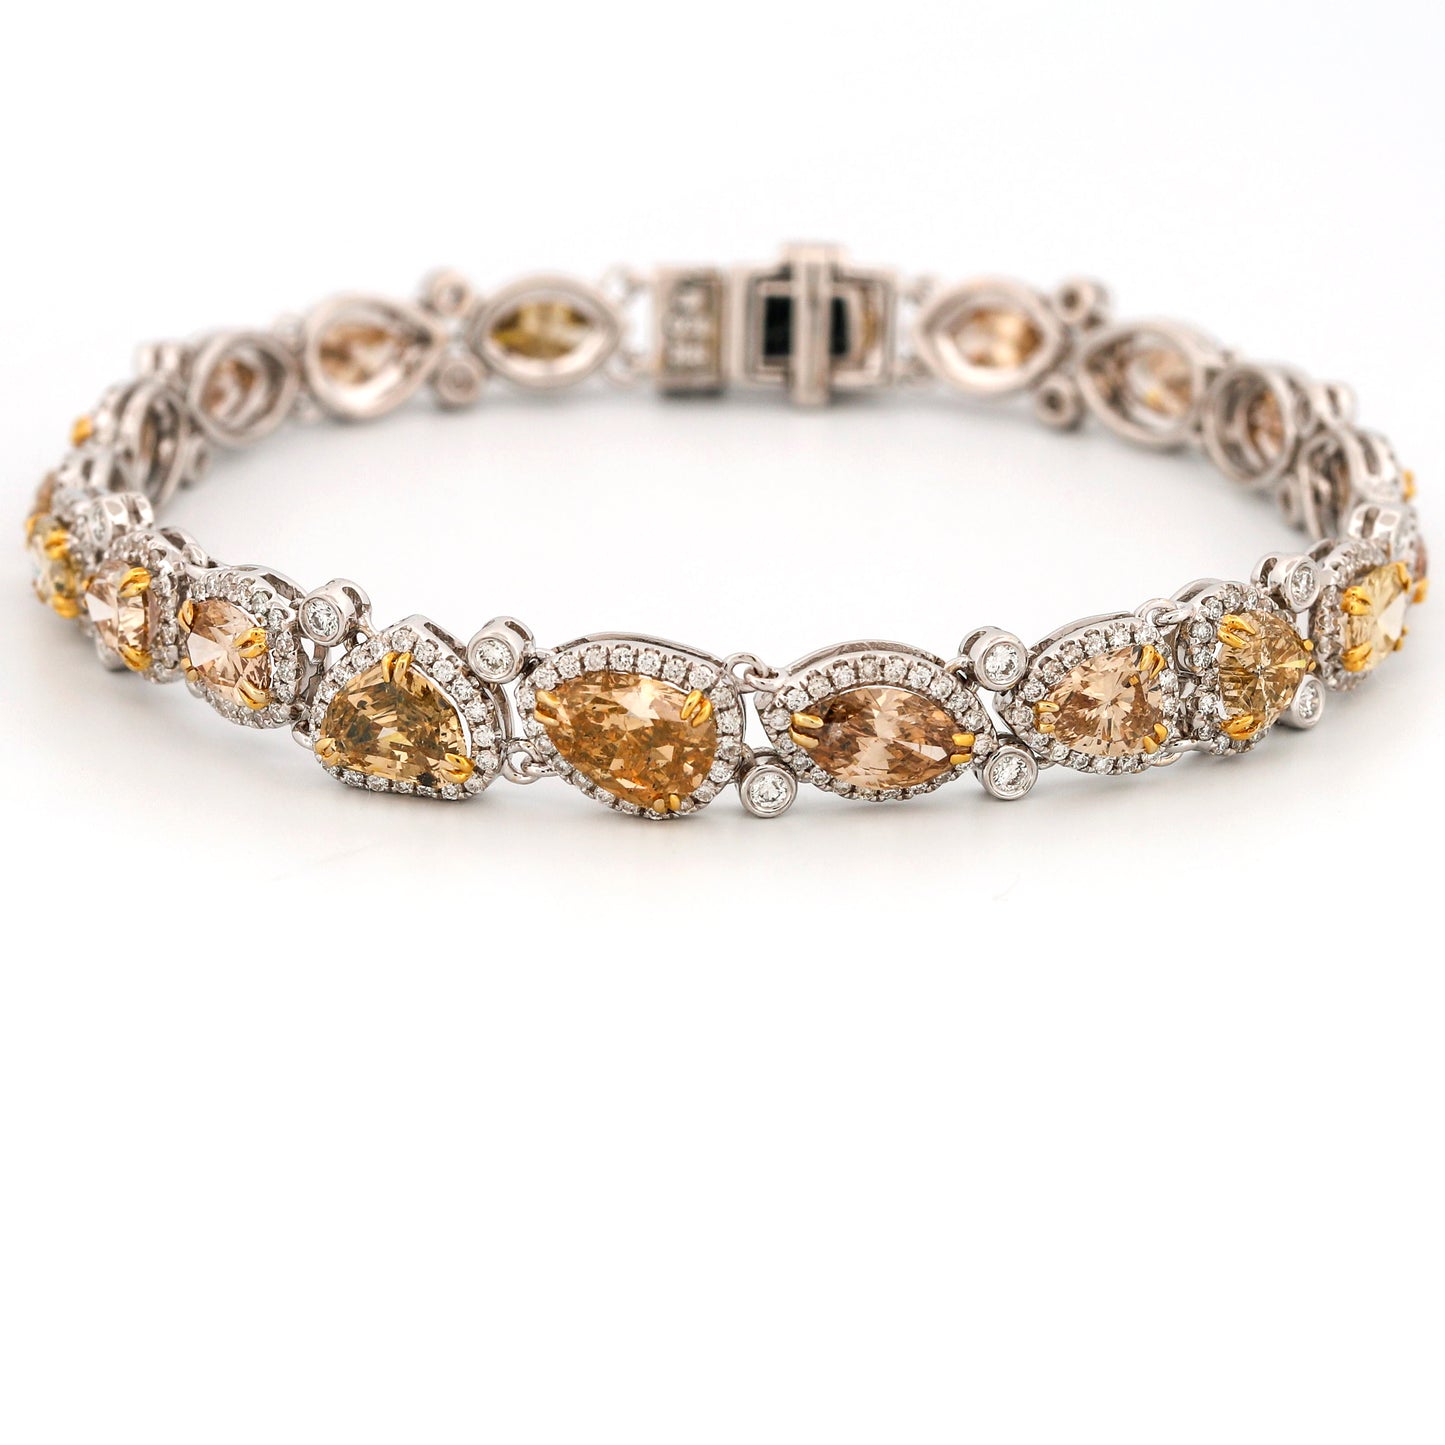 Exquisite 18k Gold Fancy Diamond Link Bracelet - Timeless Elegance